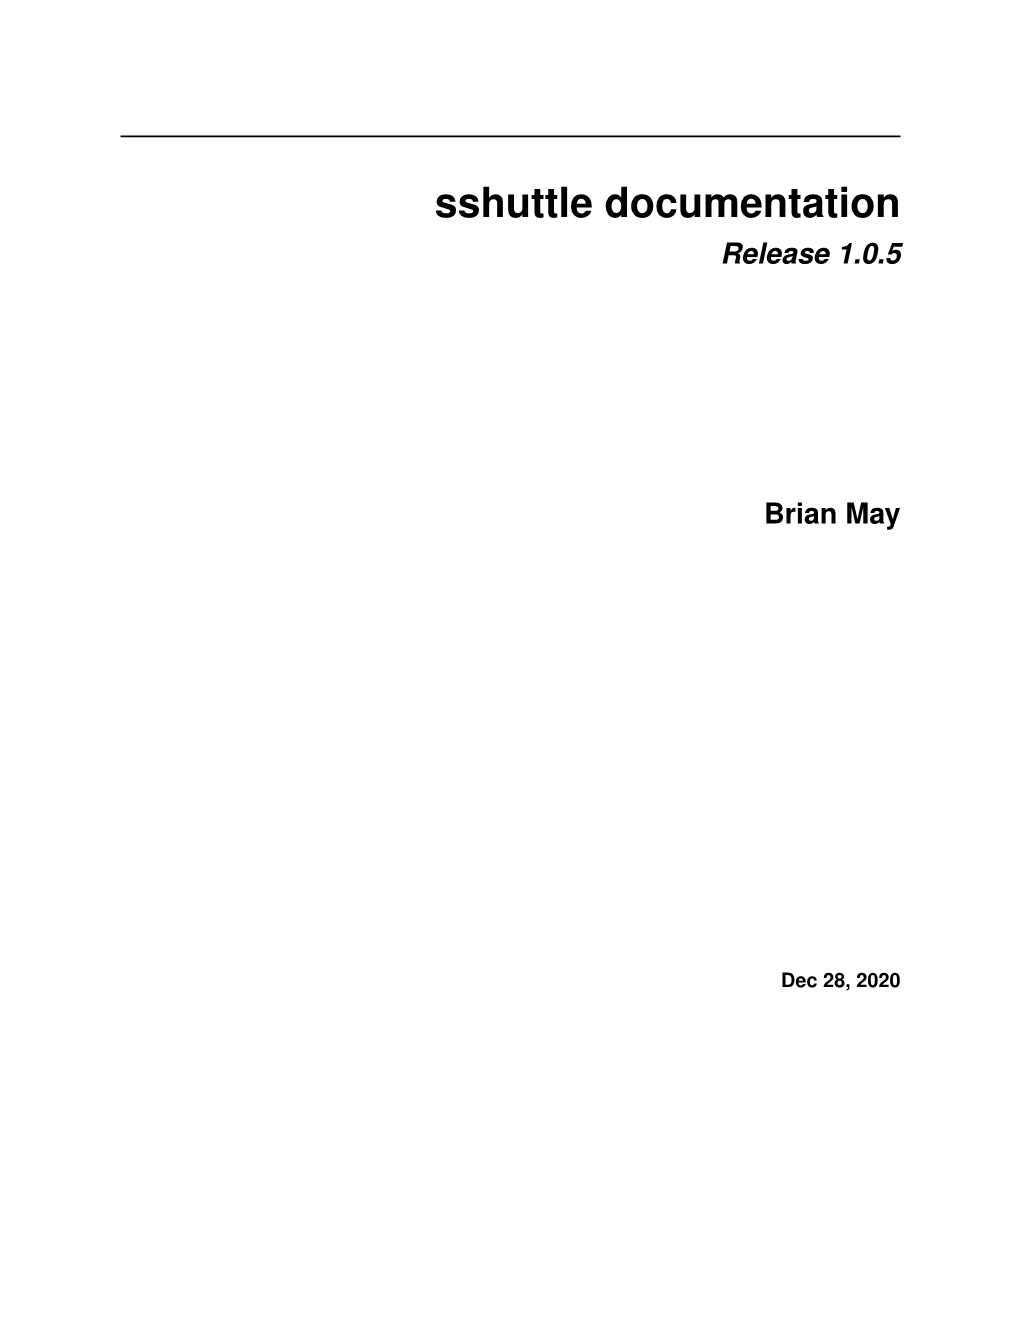 Sshuttle Documentation Release 1.0.5